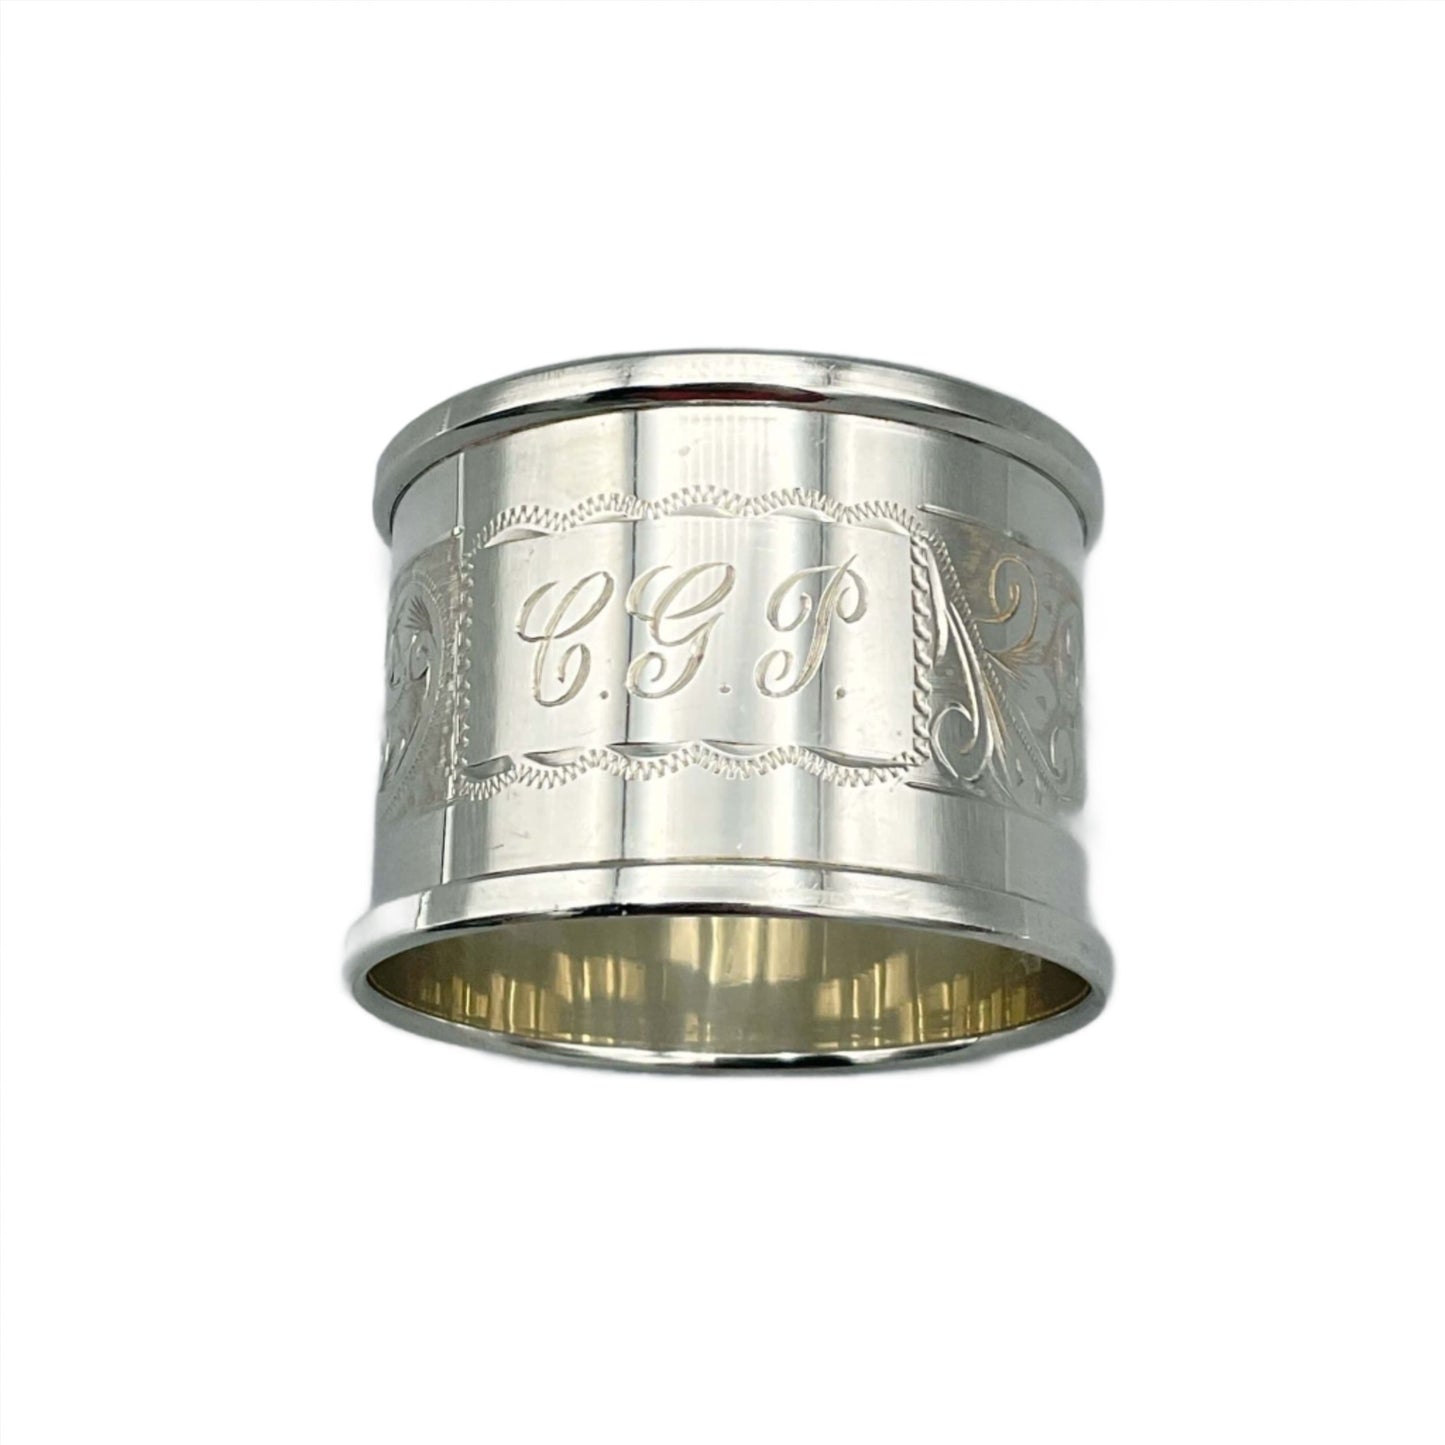 1972 Sterling Silver Napkin Ring